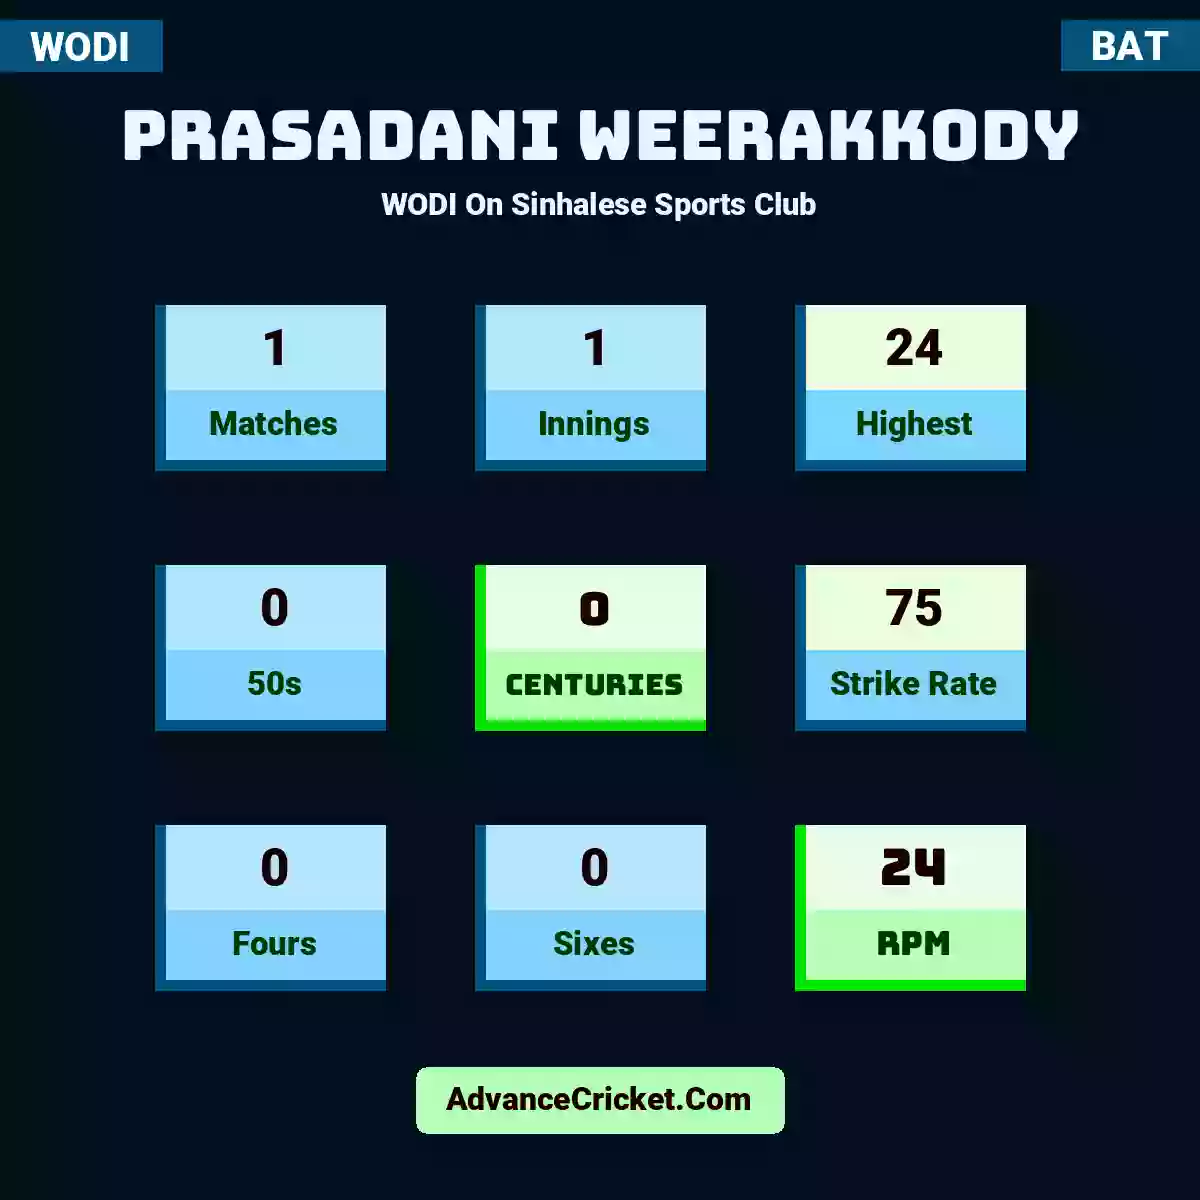 Prasadani Weerakkody WODI  On Sinhalese Sports Club, Prasadani Weerakkody played 1 matches, scored 24 runs as highest, 0 half-centuries, and 0 centuries, with a strike rate of 75. P.Weerakkody hit 0 fours and 0 sixes, with an RPM of 24.